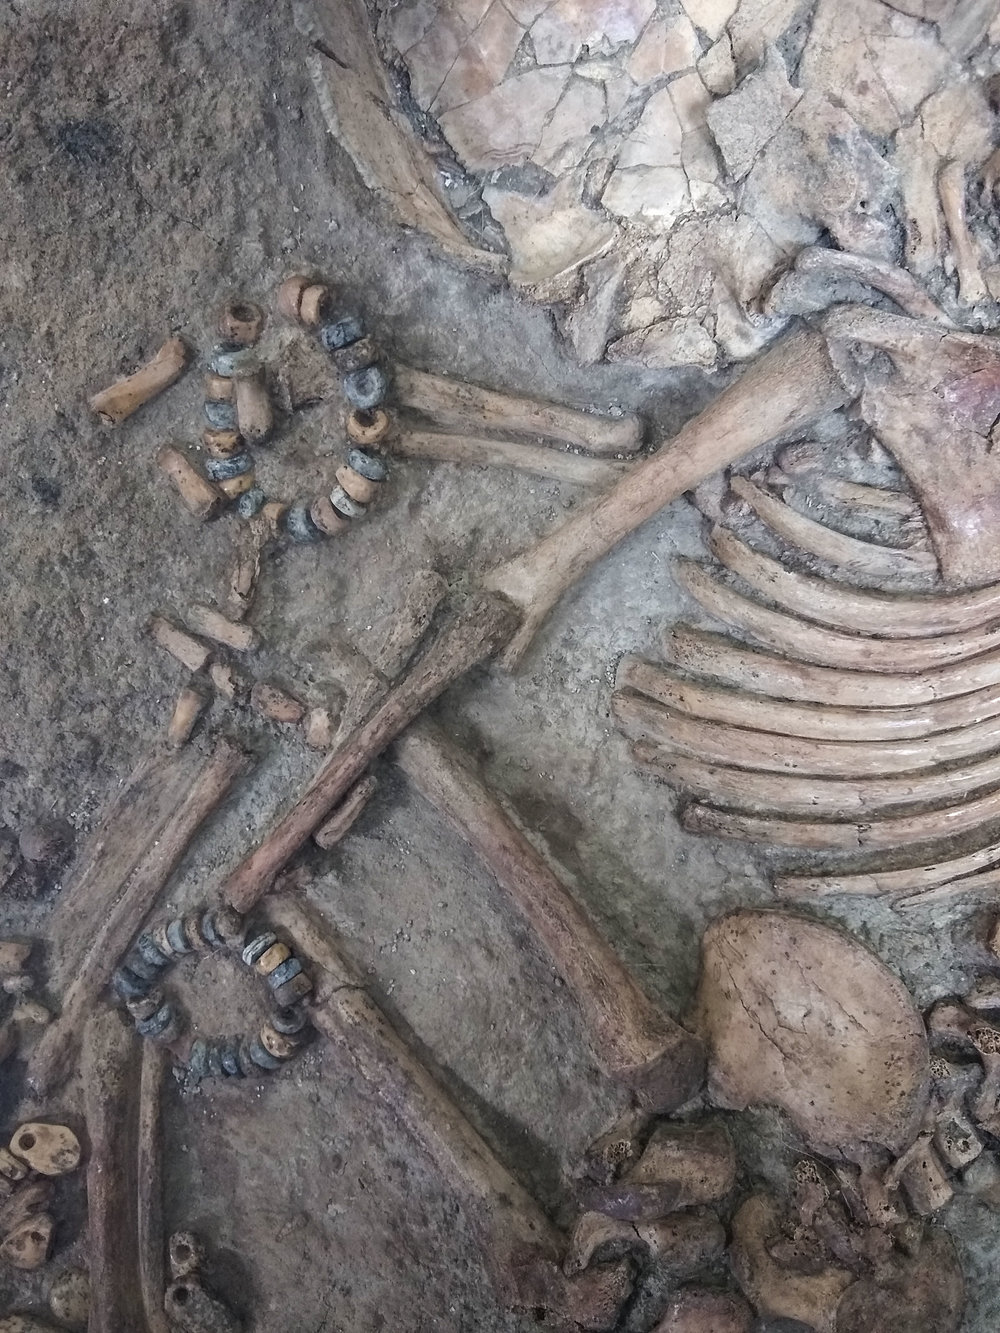 Prehistoric Child Burial